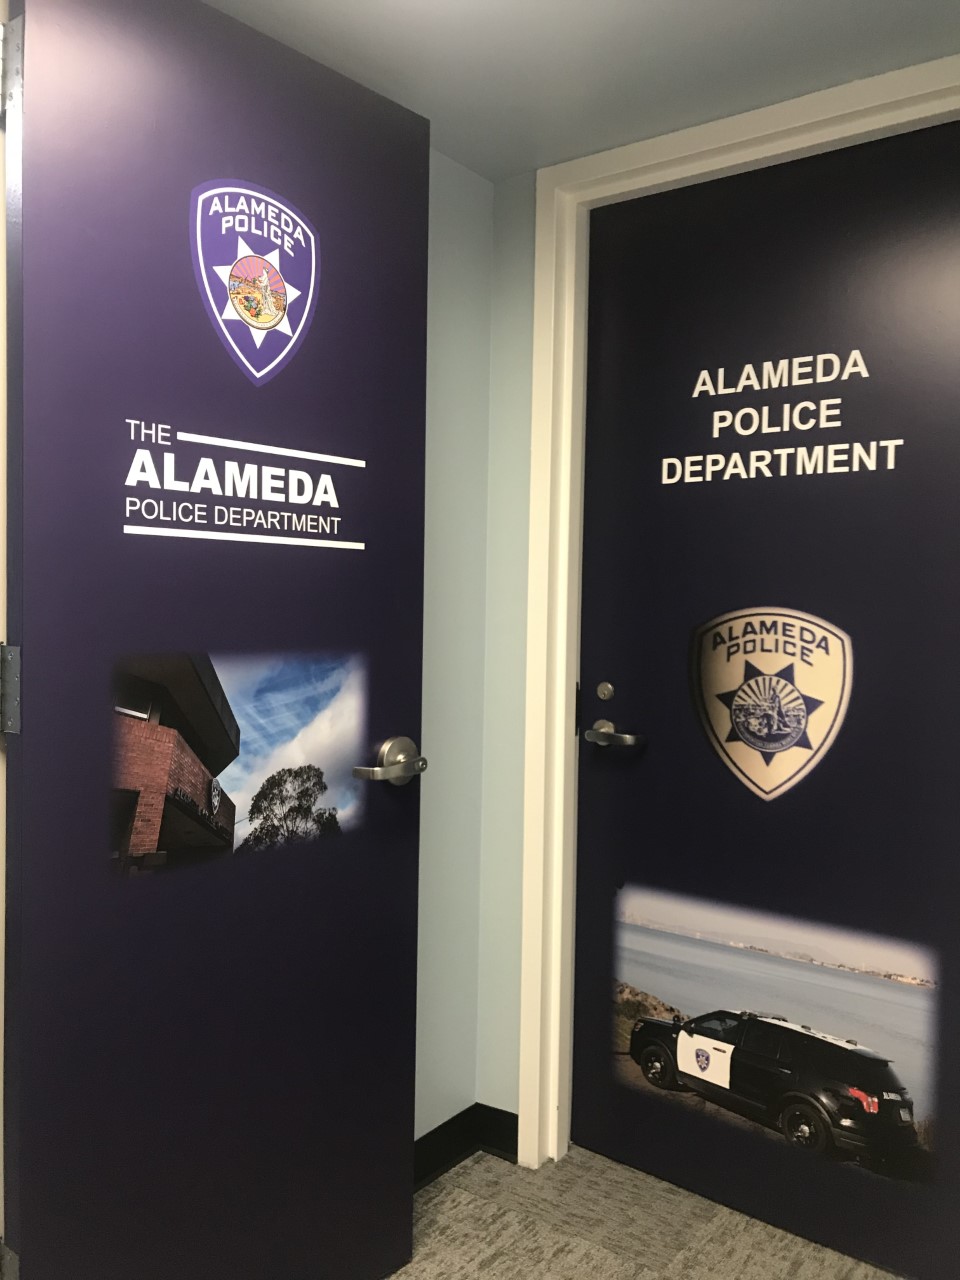 Alameda police department